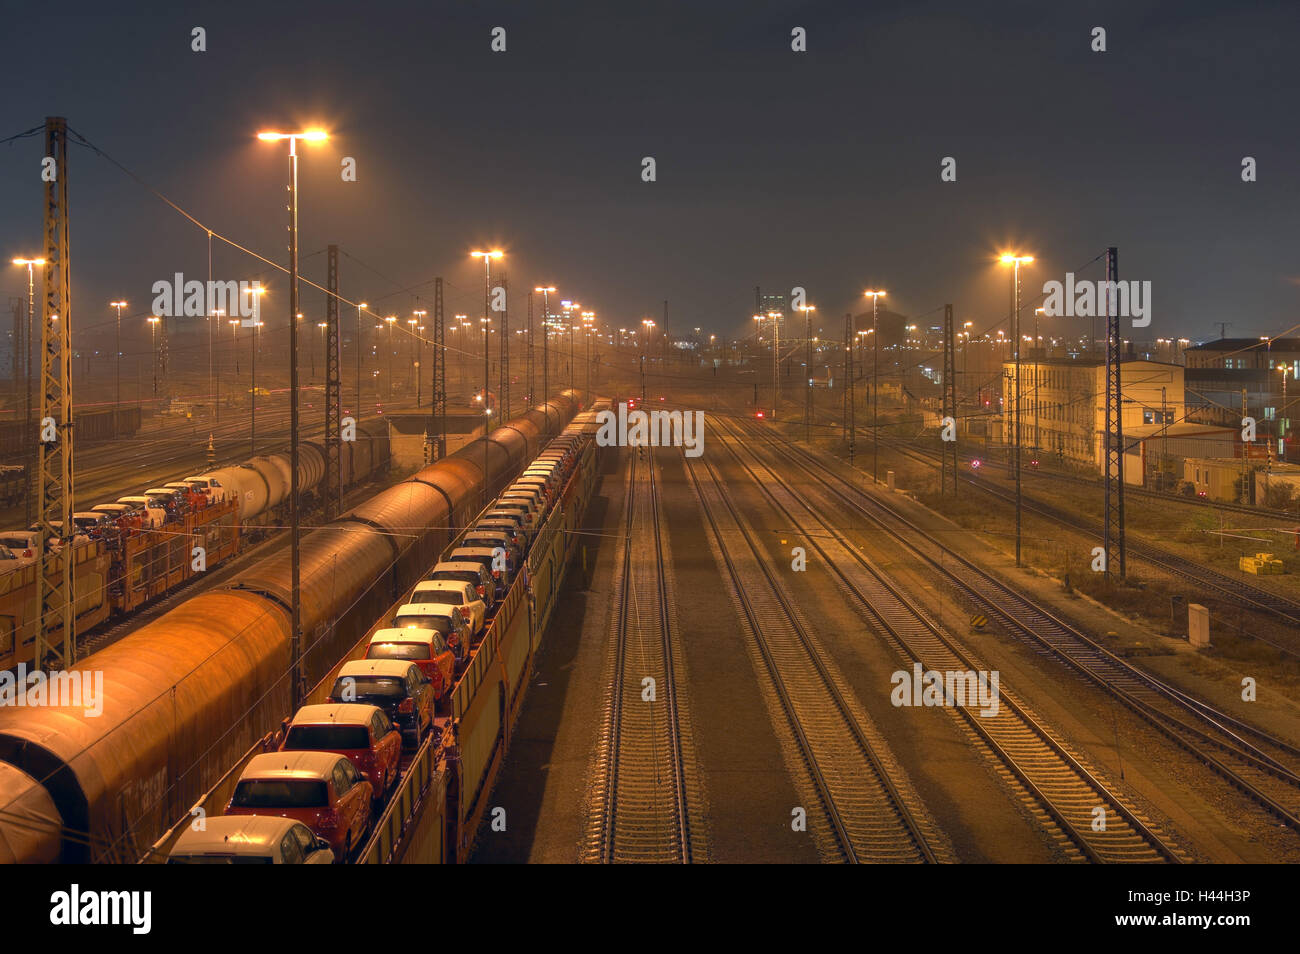 Tracks, freight trains, night photography, Stock Photo